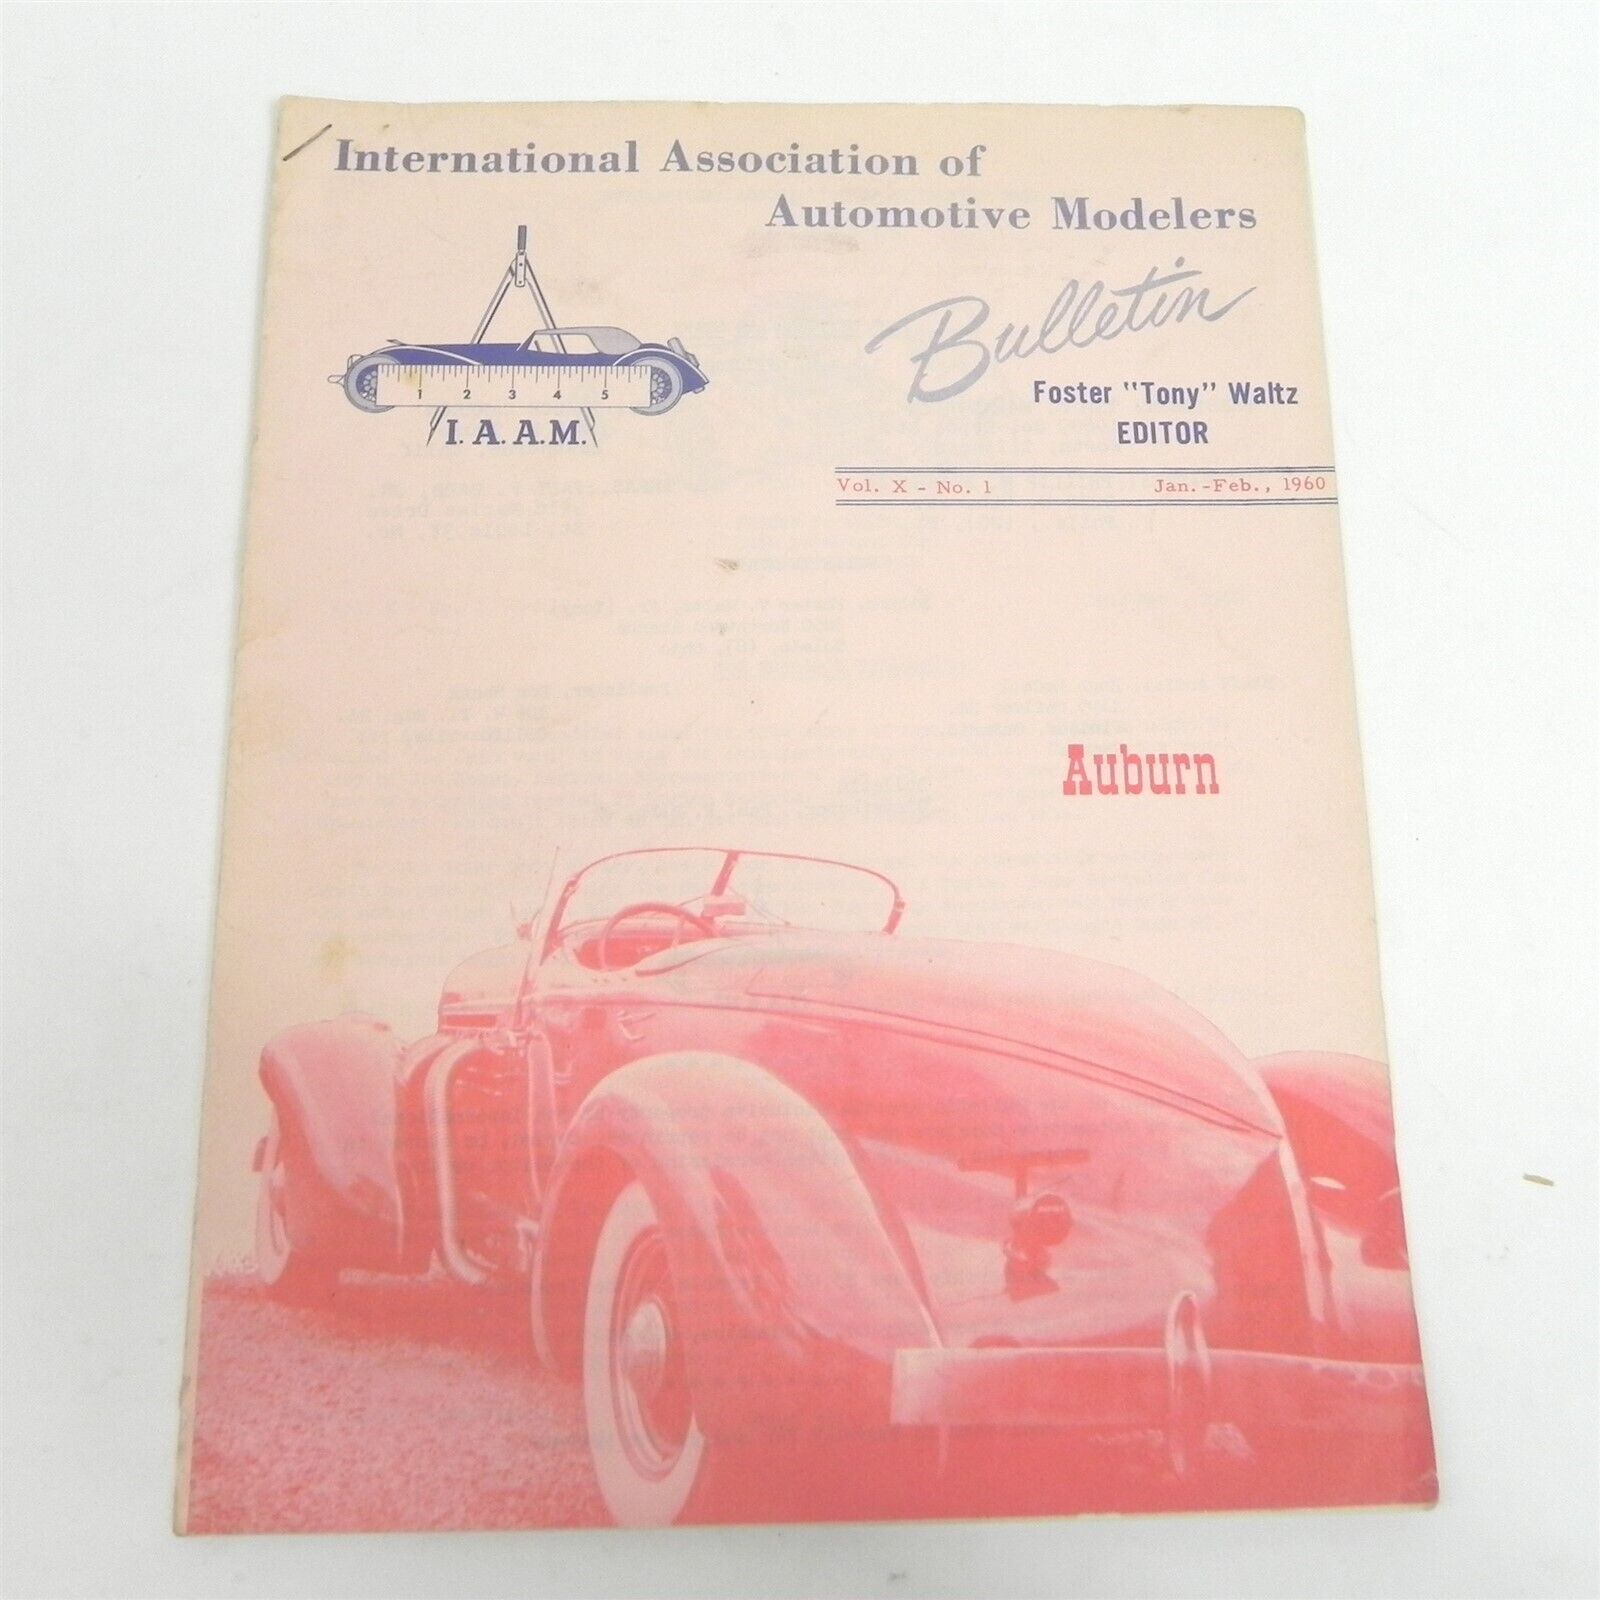 1960 JANUARY FEBRUARY INTERNATIONAL ASSOCIATION OF AUTOMOTIVE MODELERS BULLETIN